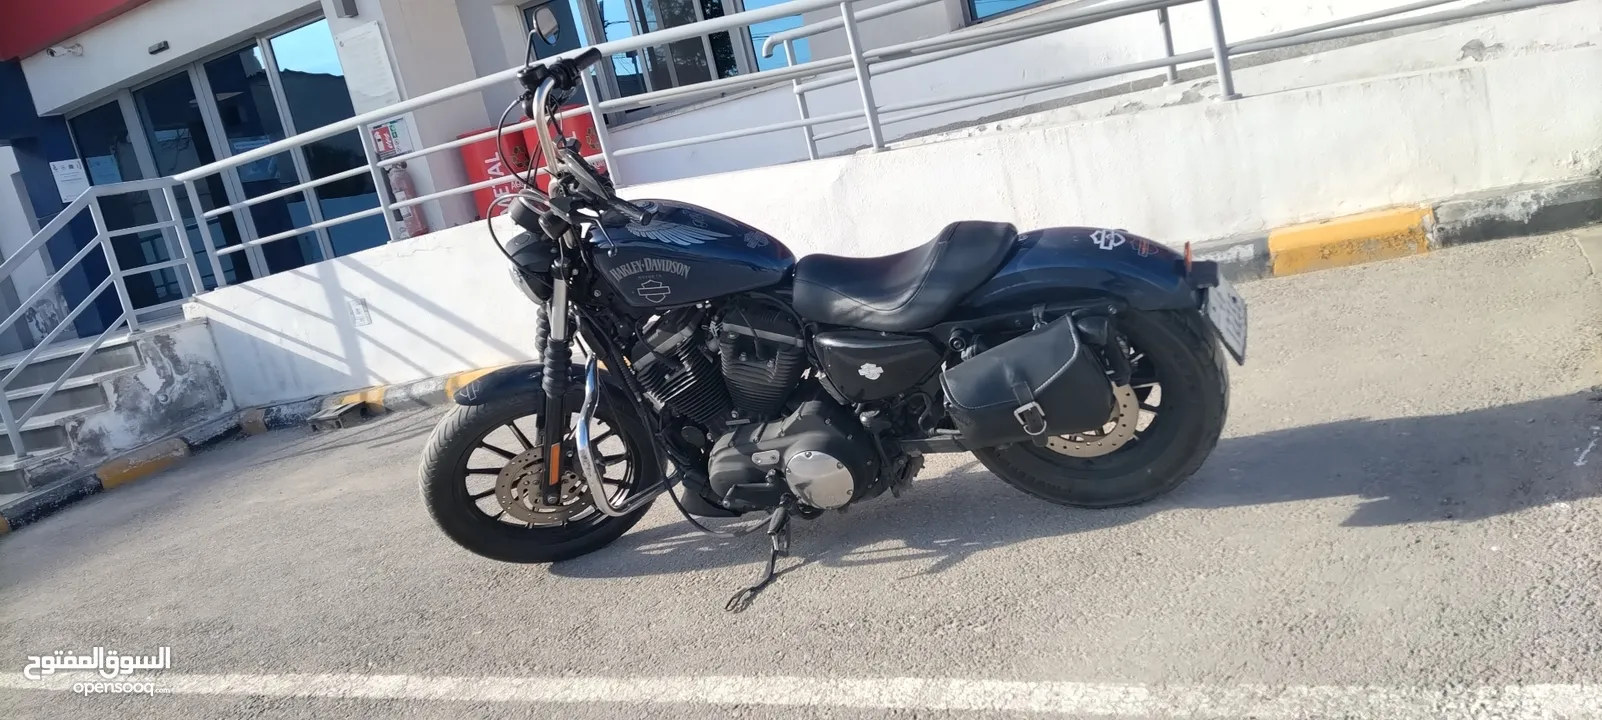 2012 Harley Davidson Iron 883